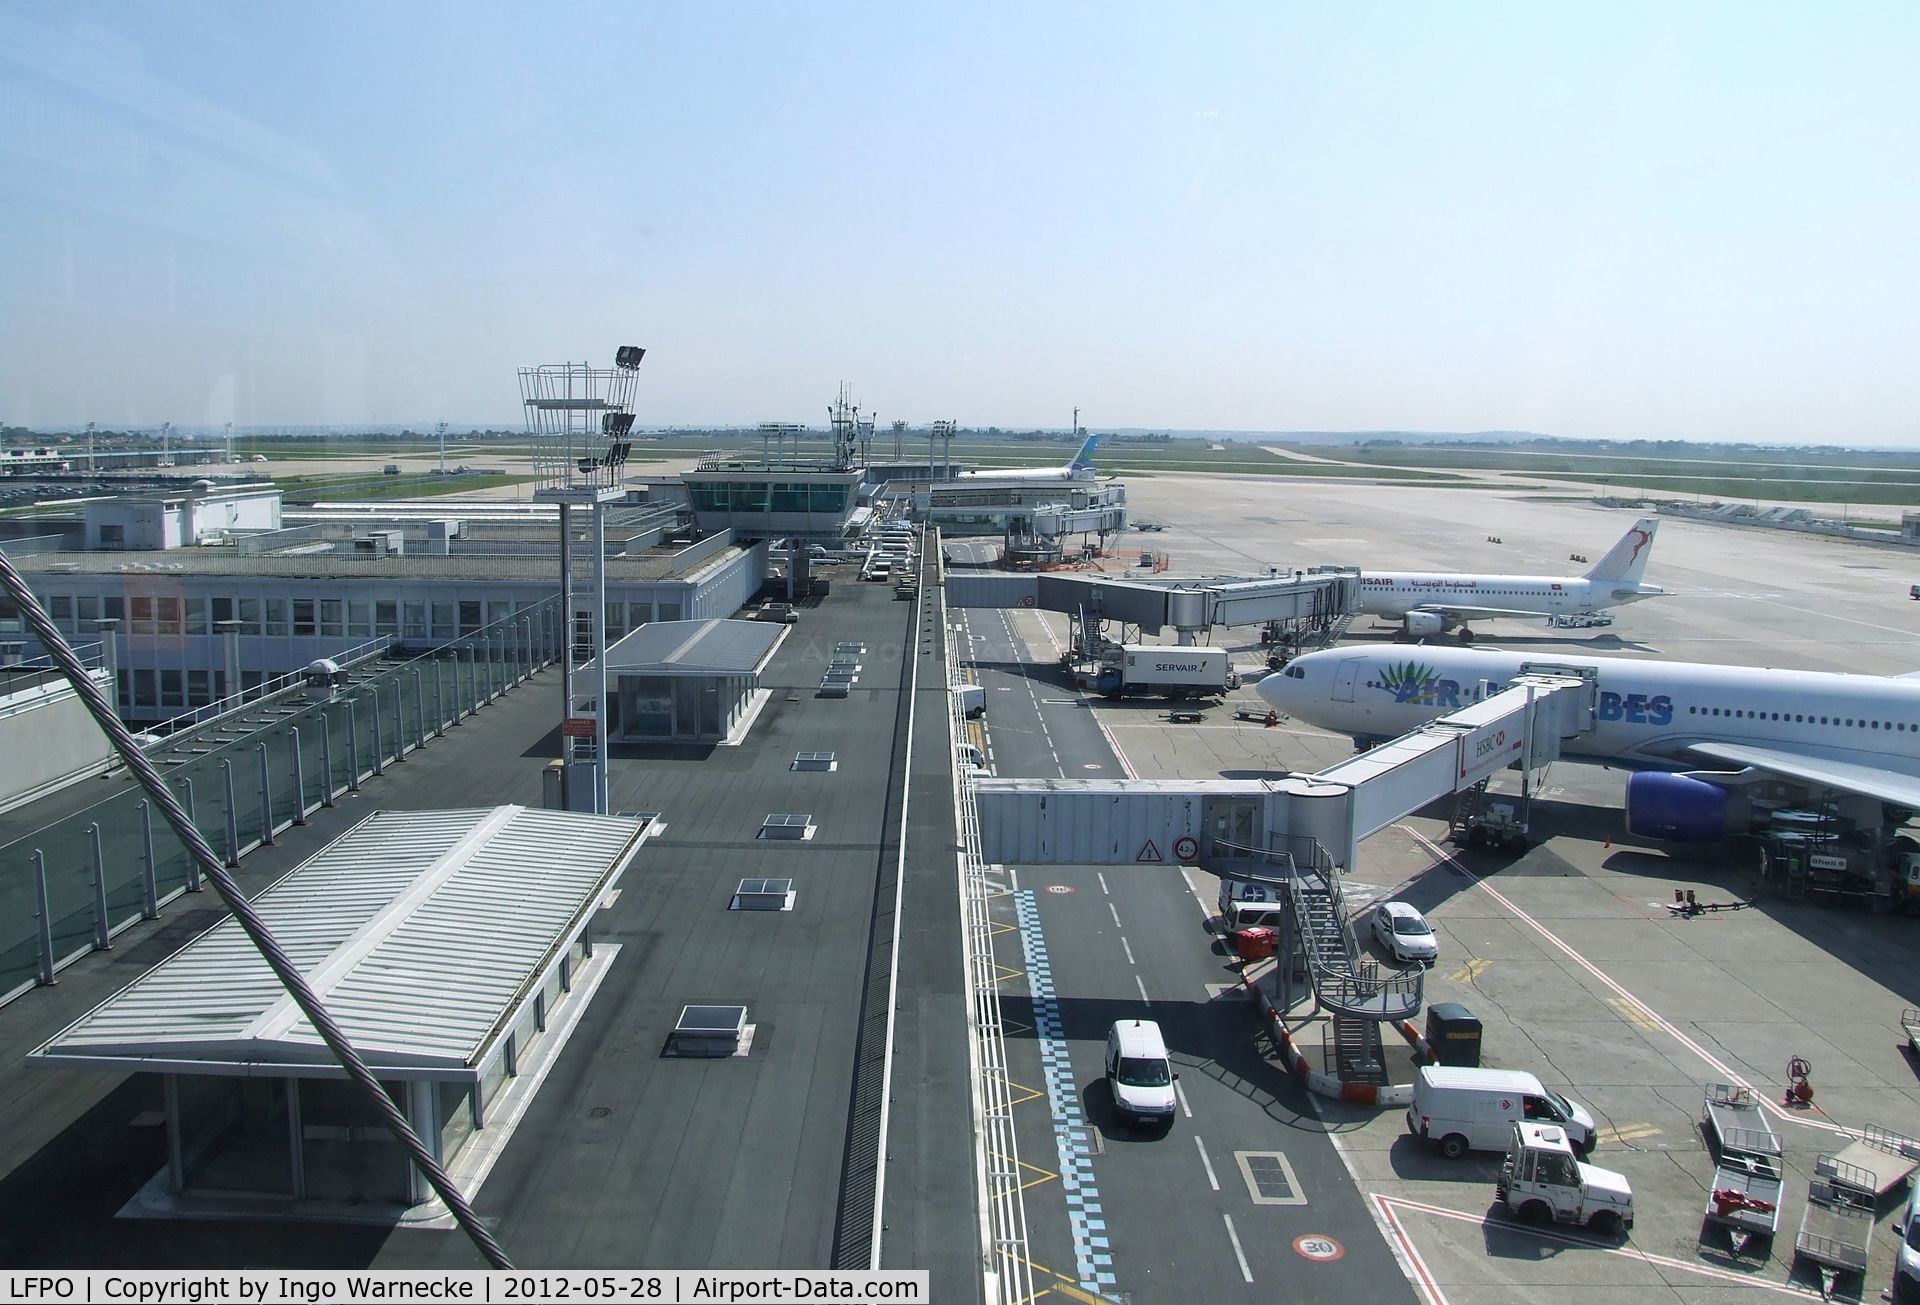 Paris Orly Airport, Orly (near Paris) France (LFPO) - terminal and gates at Paris-Orly airport